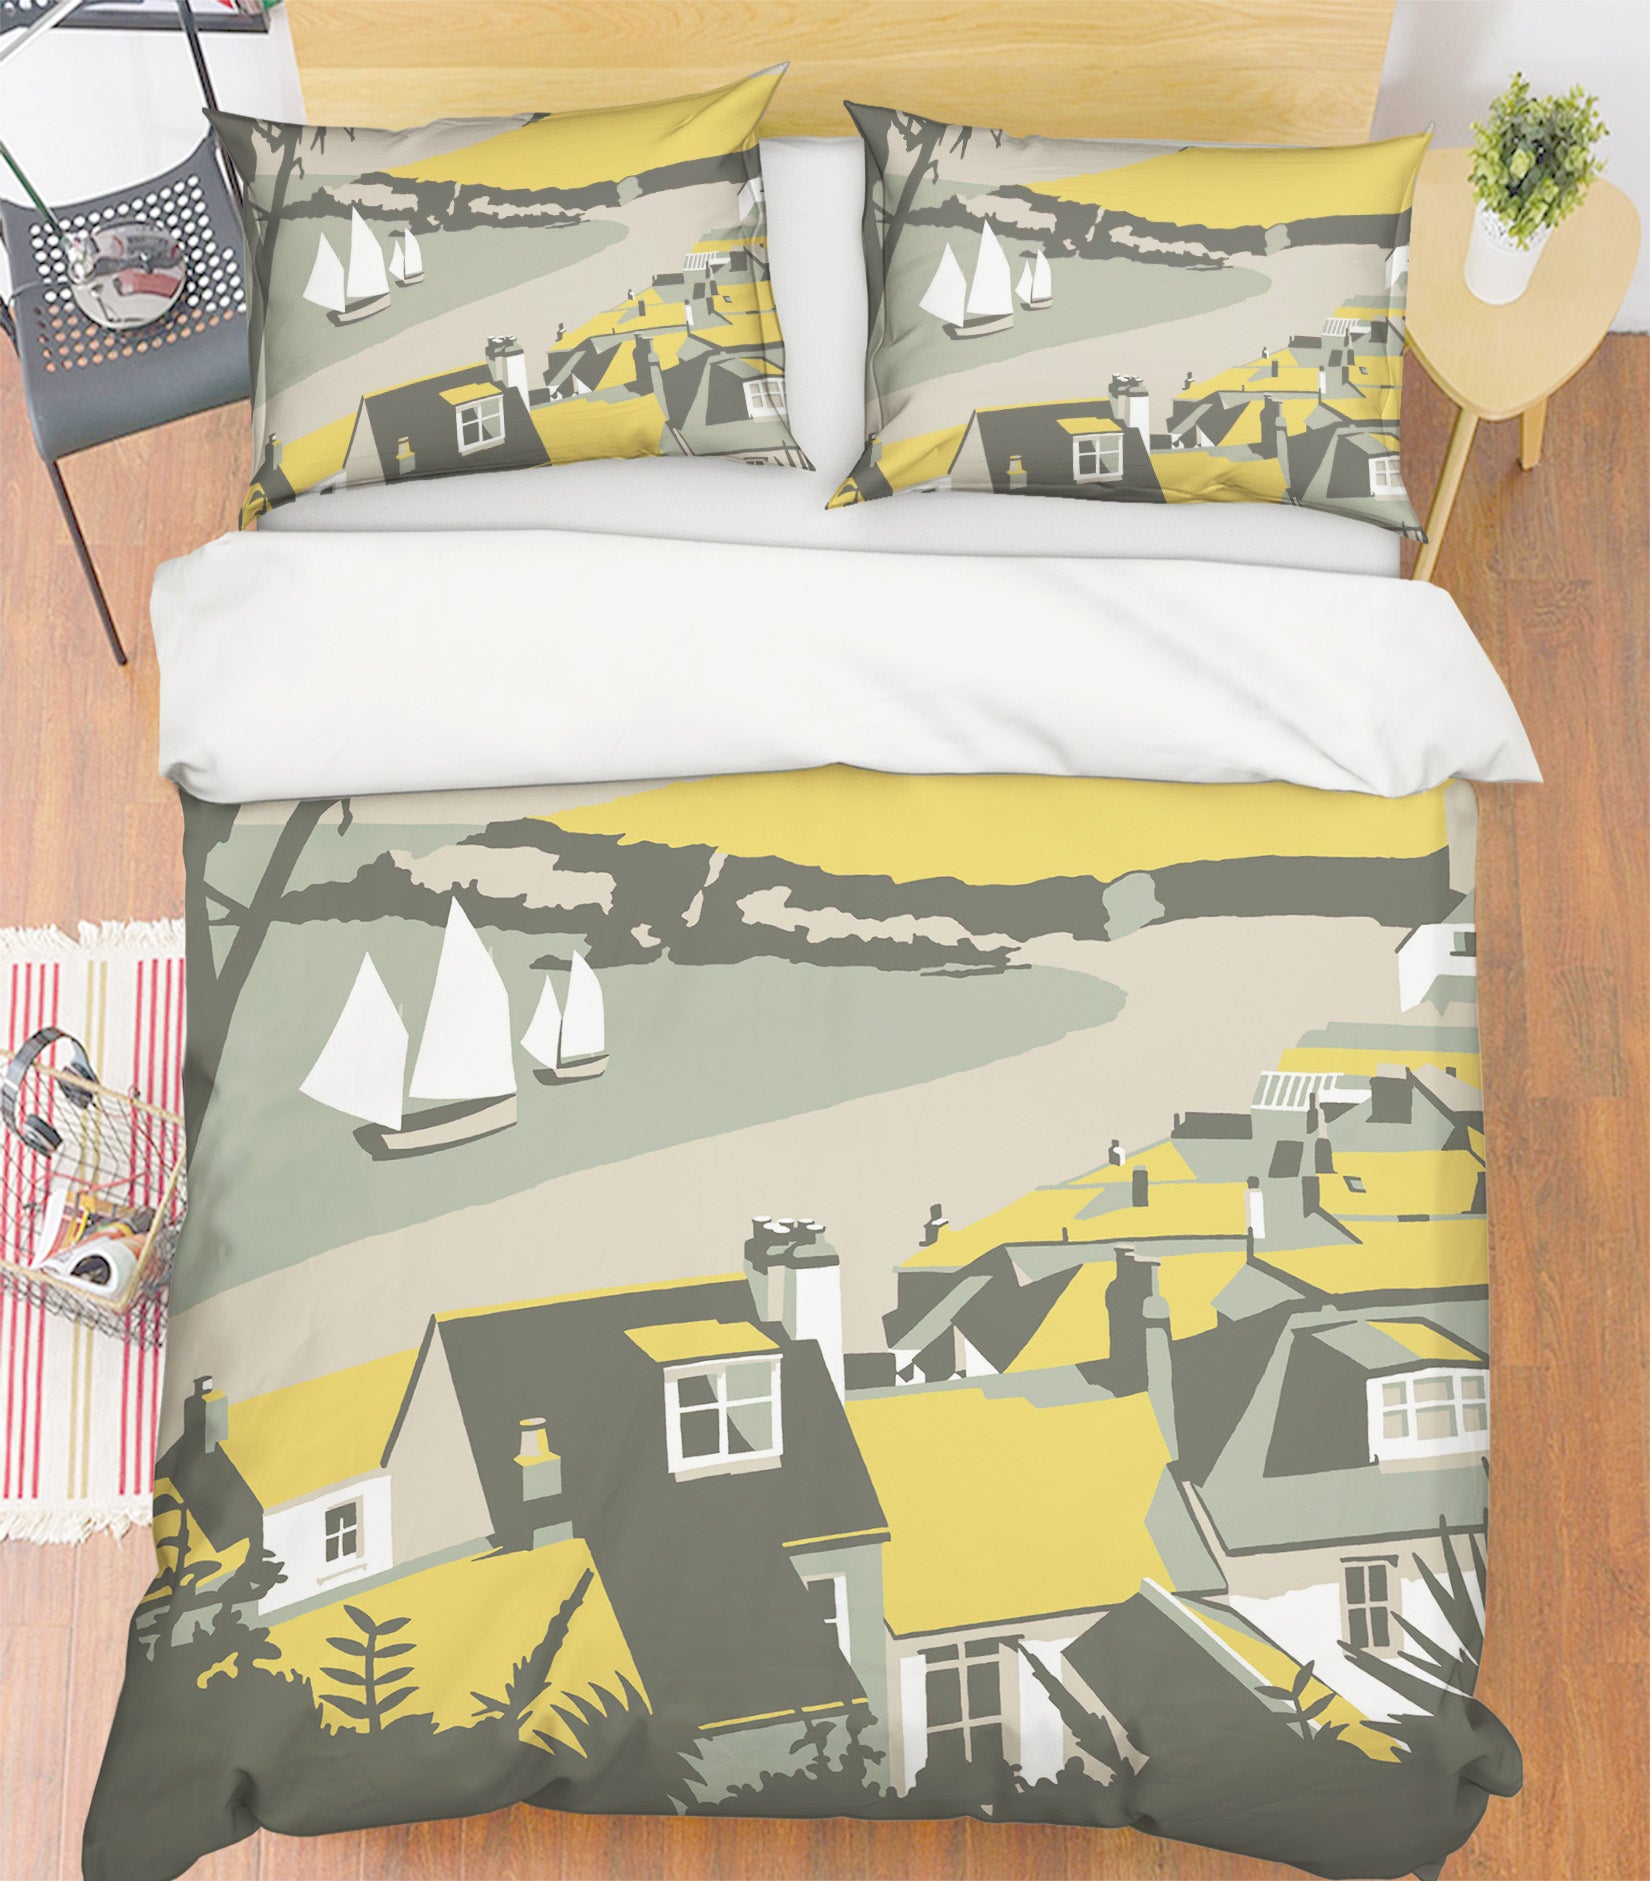 3D Leisure Residence 2067 Steve Read Bedding Bed Pillowcases Quilt